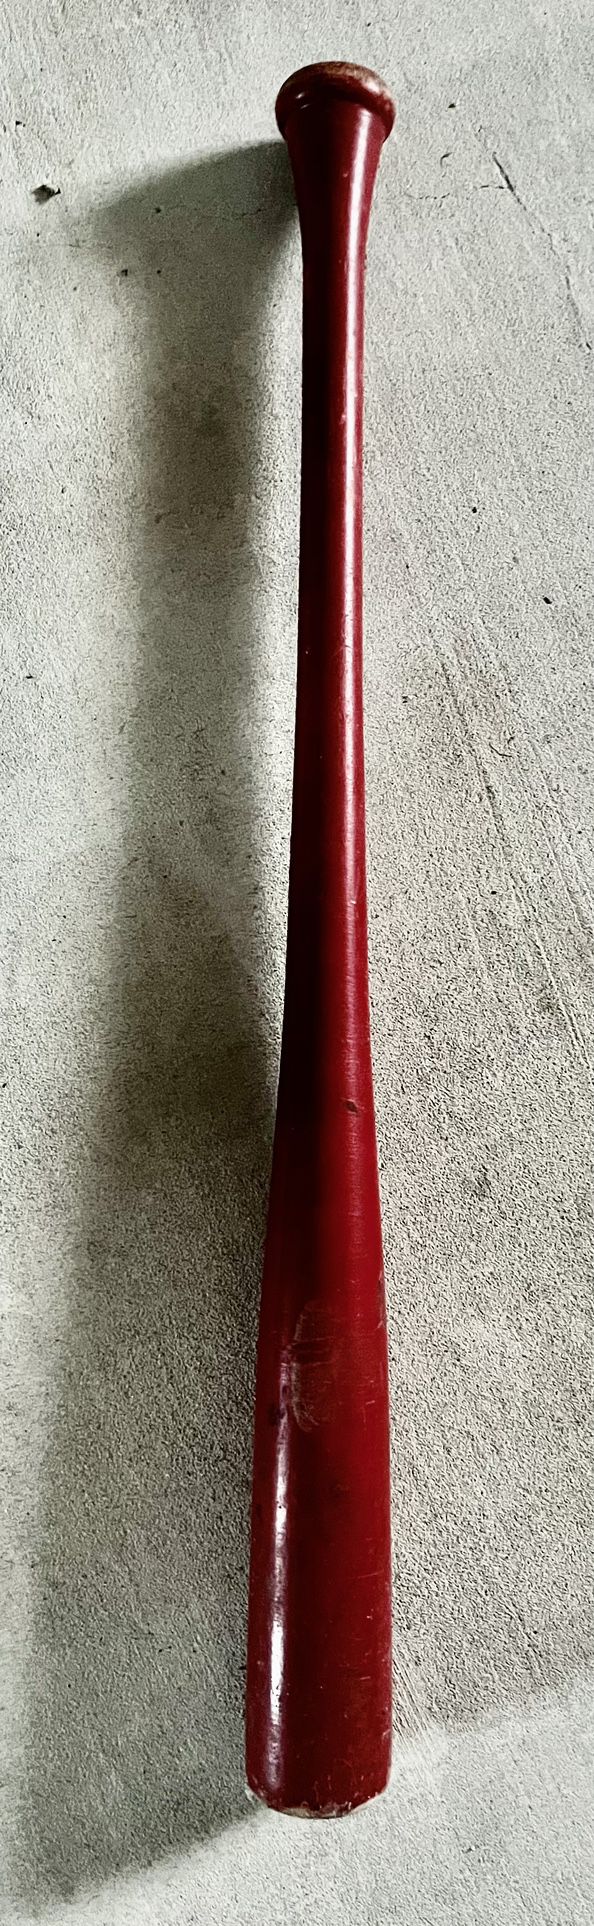 Youth Wood Baseball Bat